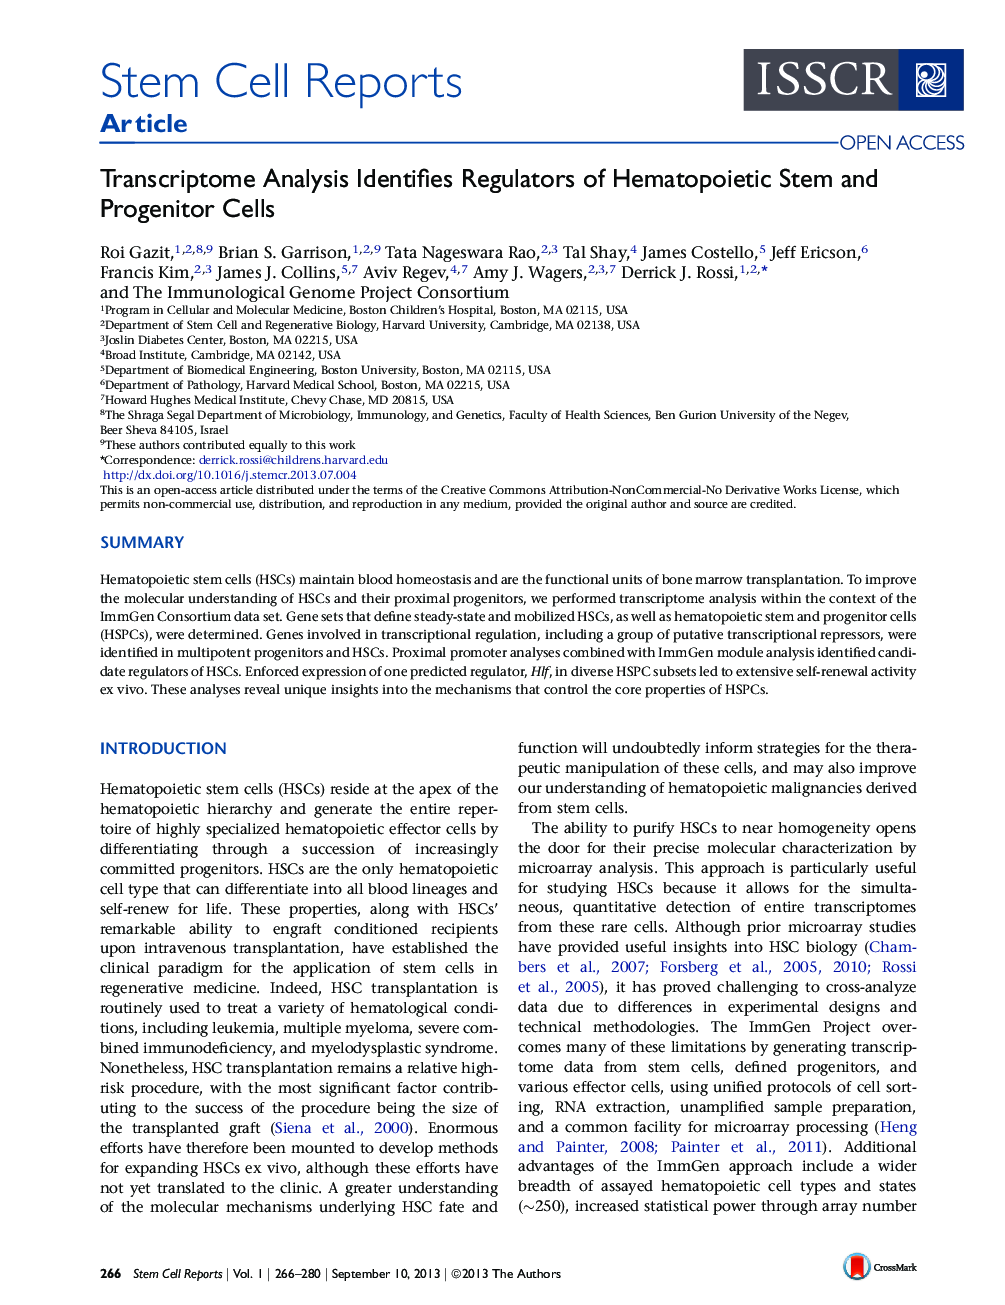 Transcriptome Analysis Identifies Regulators of Hematopoietic Stem and Progenitor Cells 